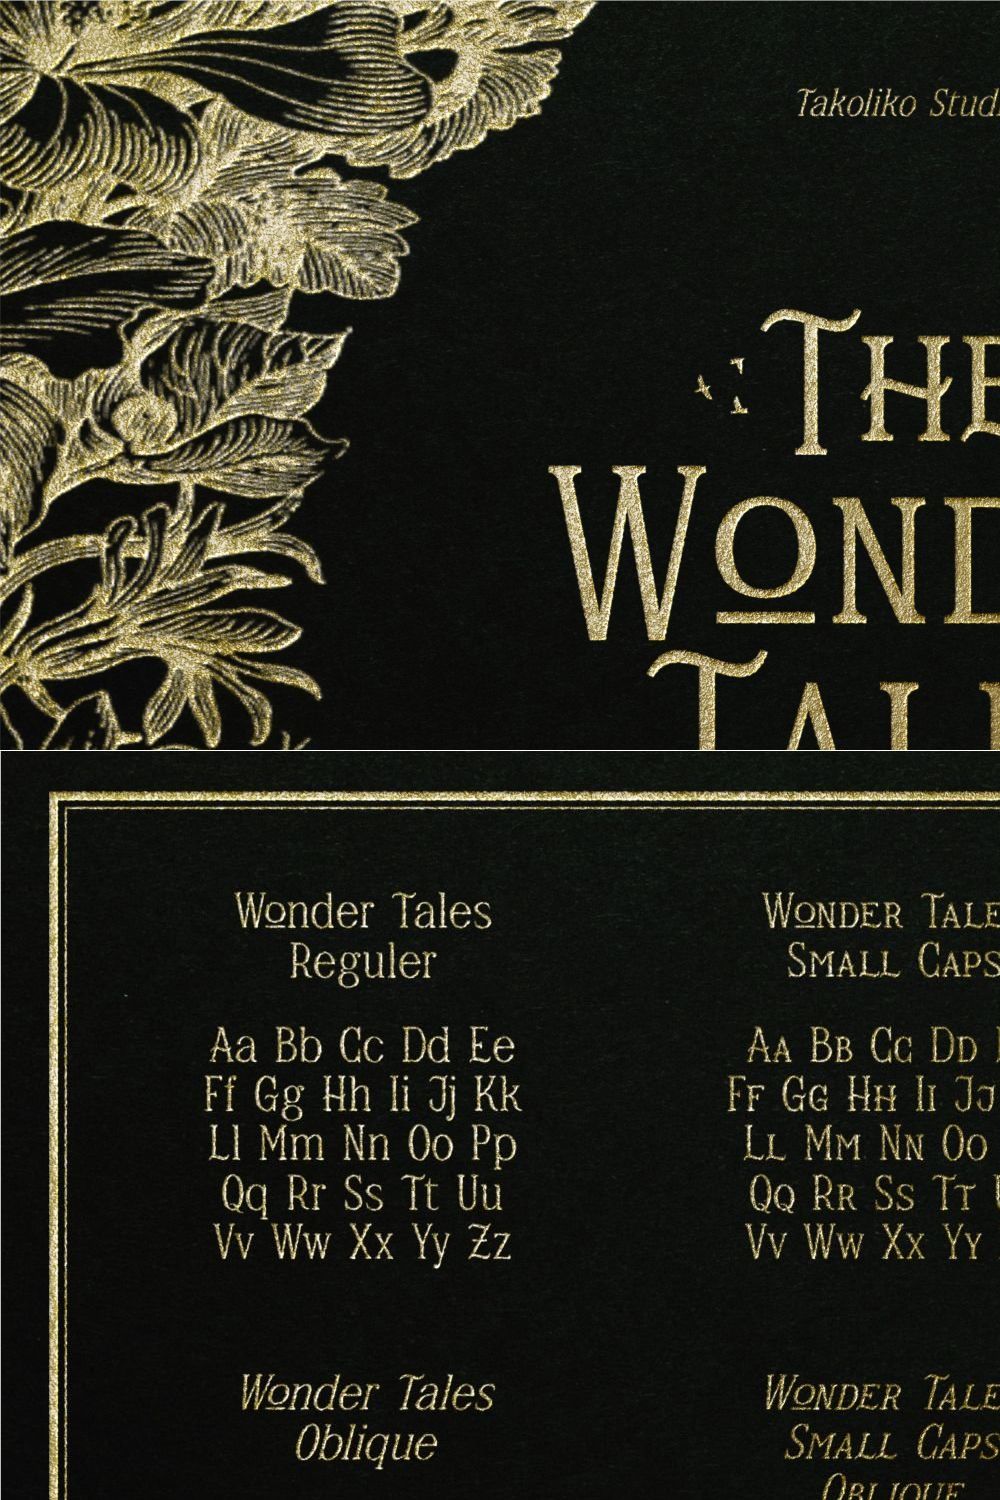 Wonder Tales pinterest preview image.